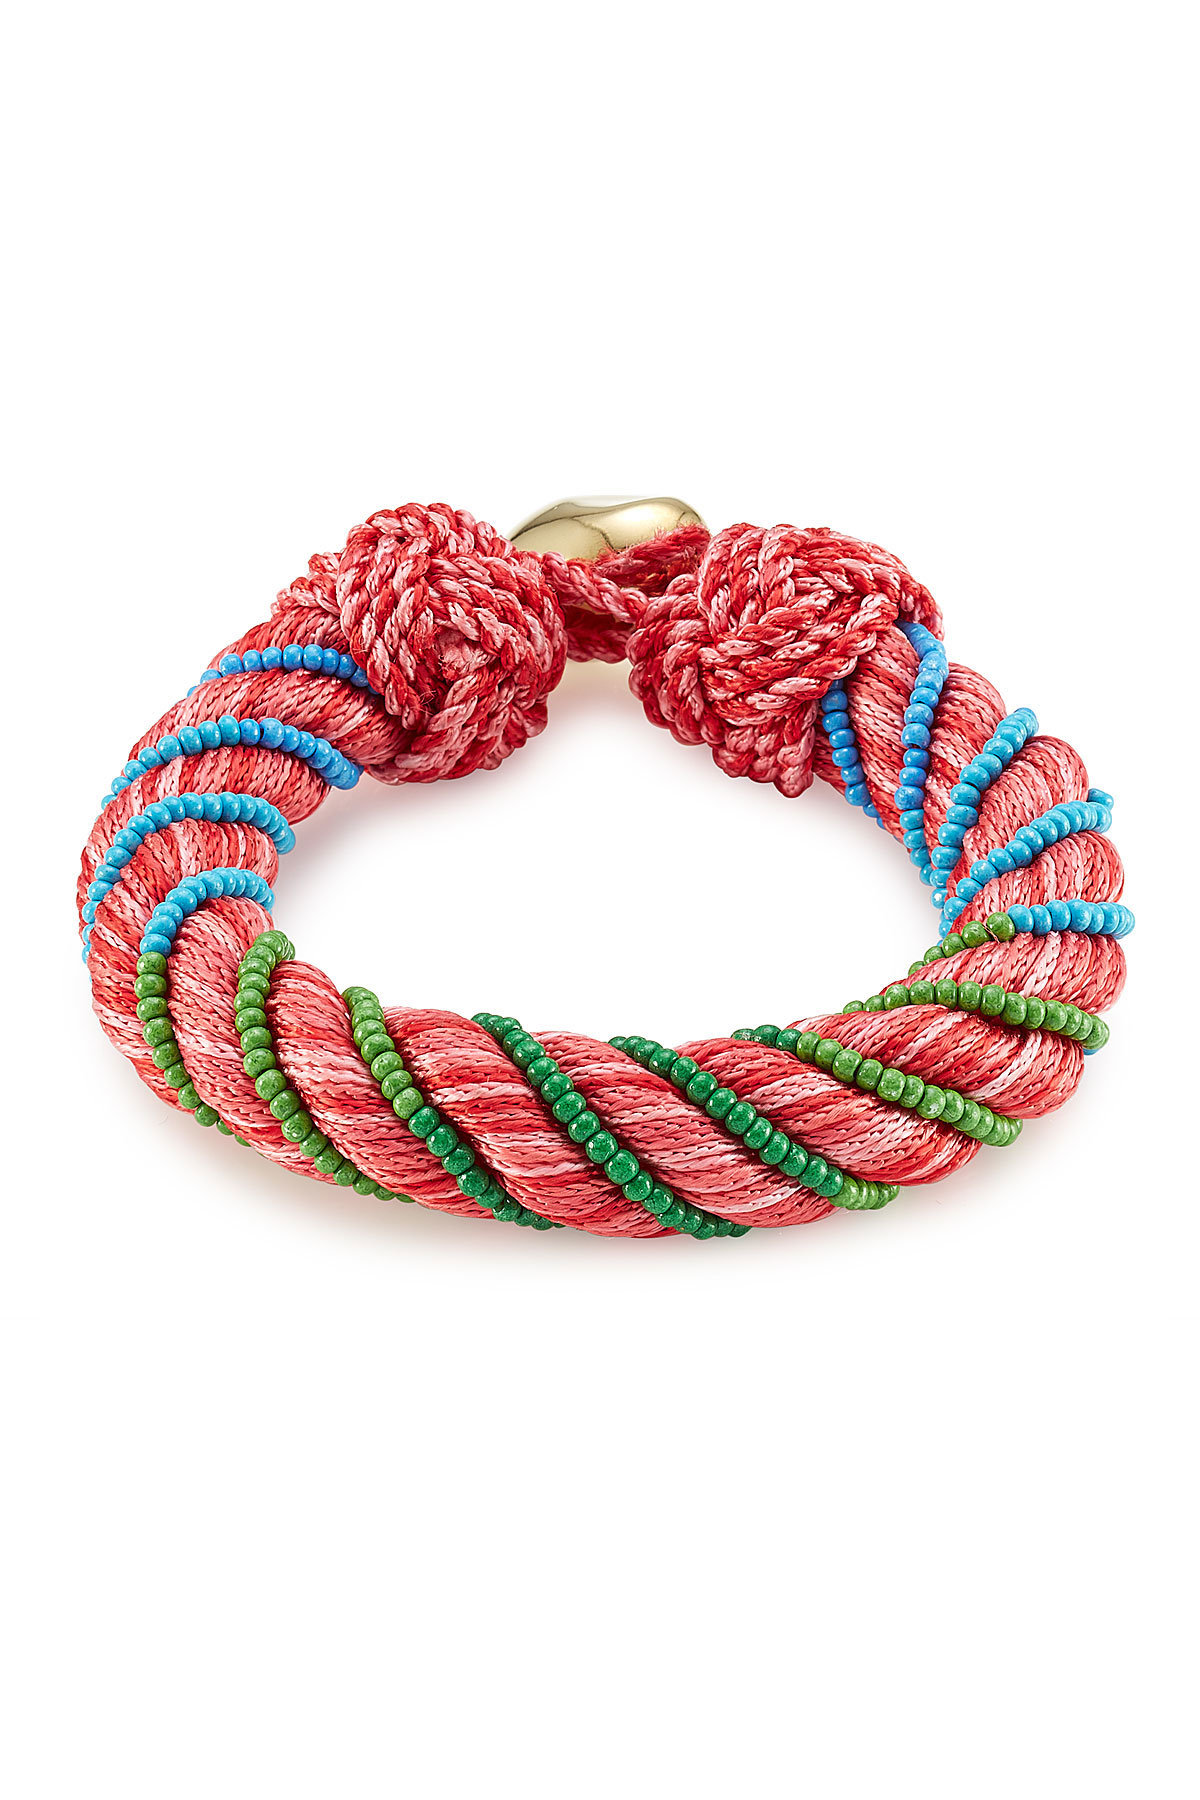 Aurélie Bidermann - Bracelet with Glass Beads